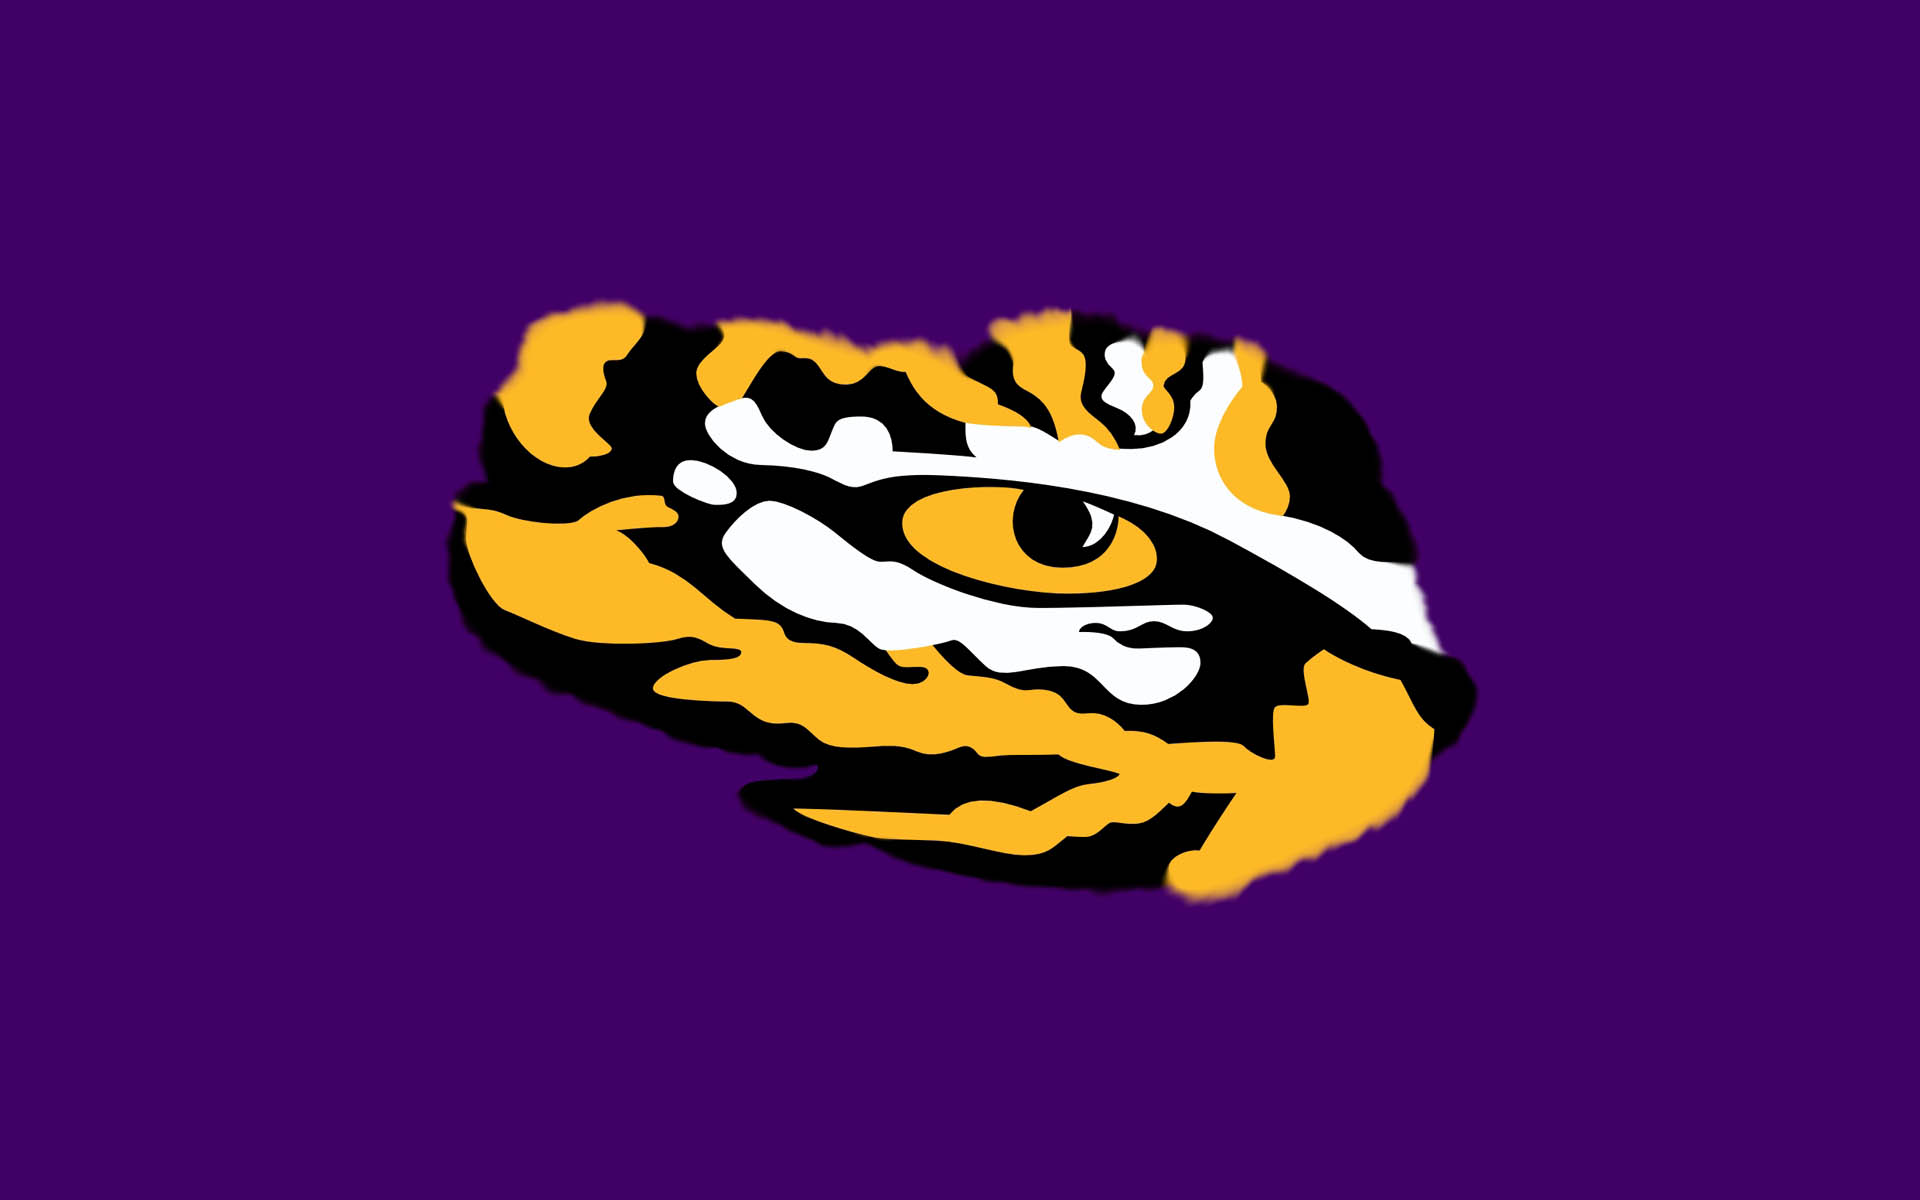 Lsu Tiger Eye Sports Team Logo Wallpaper For iPad Cute